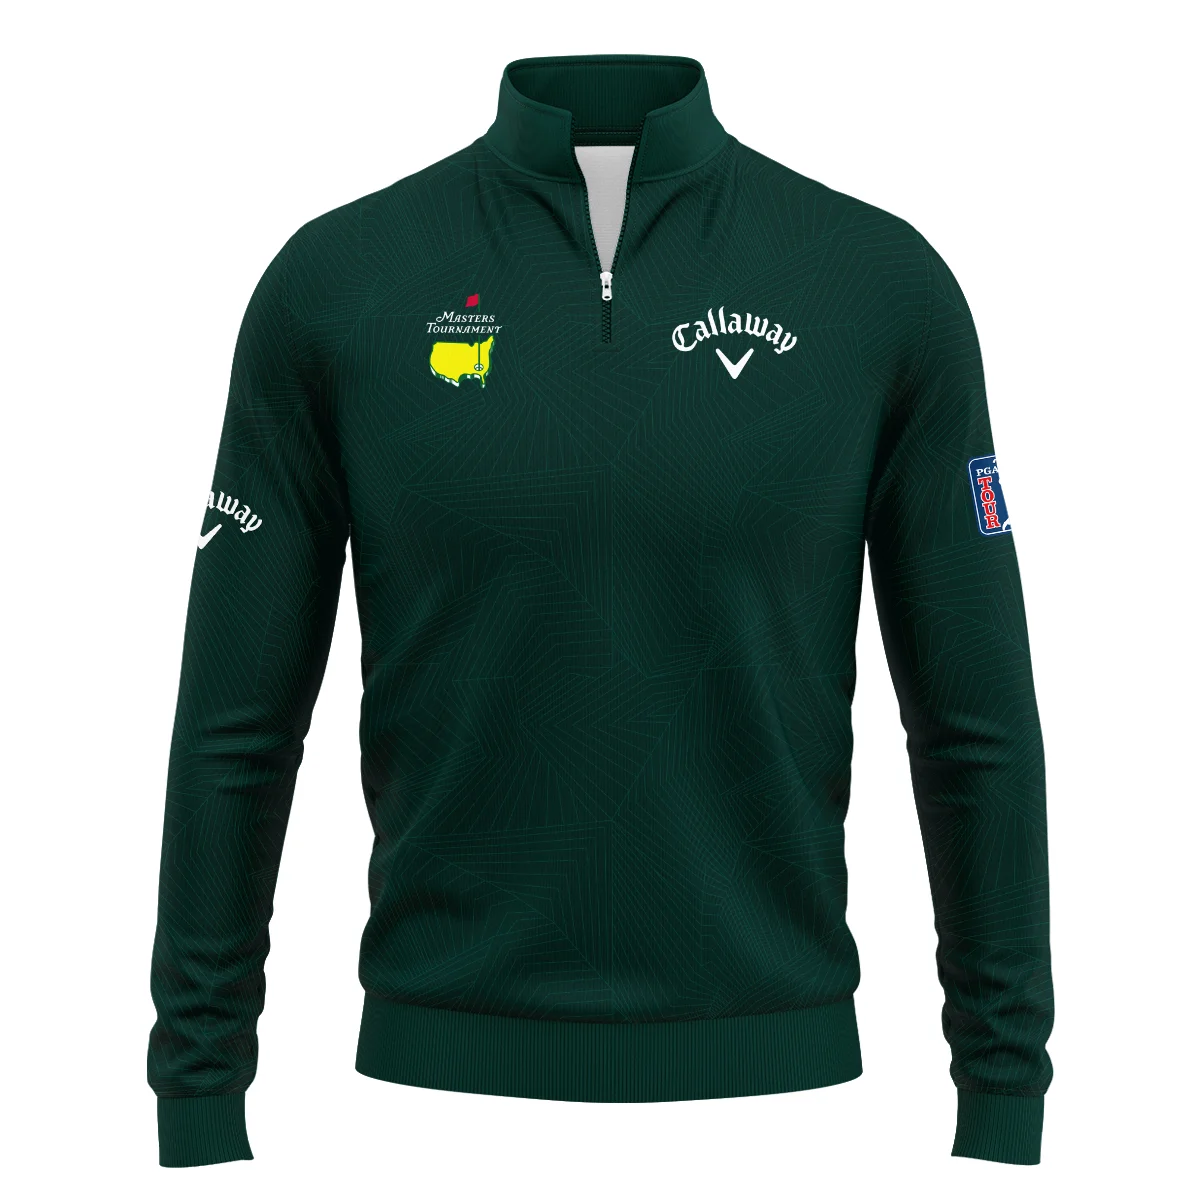 Masters Tournament Callaway Pattern Sport Jersey Dark Green Unisex T-Shirt Style Classic T-Shirt